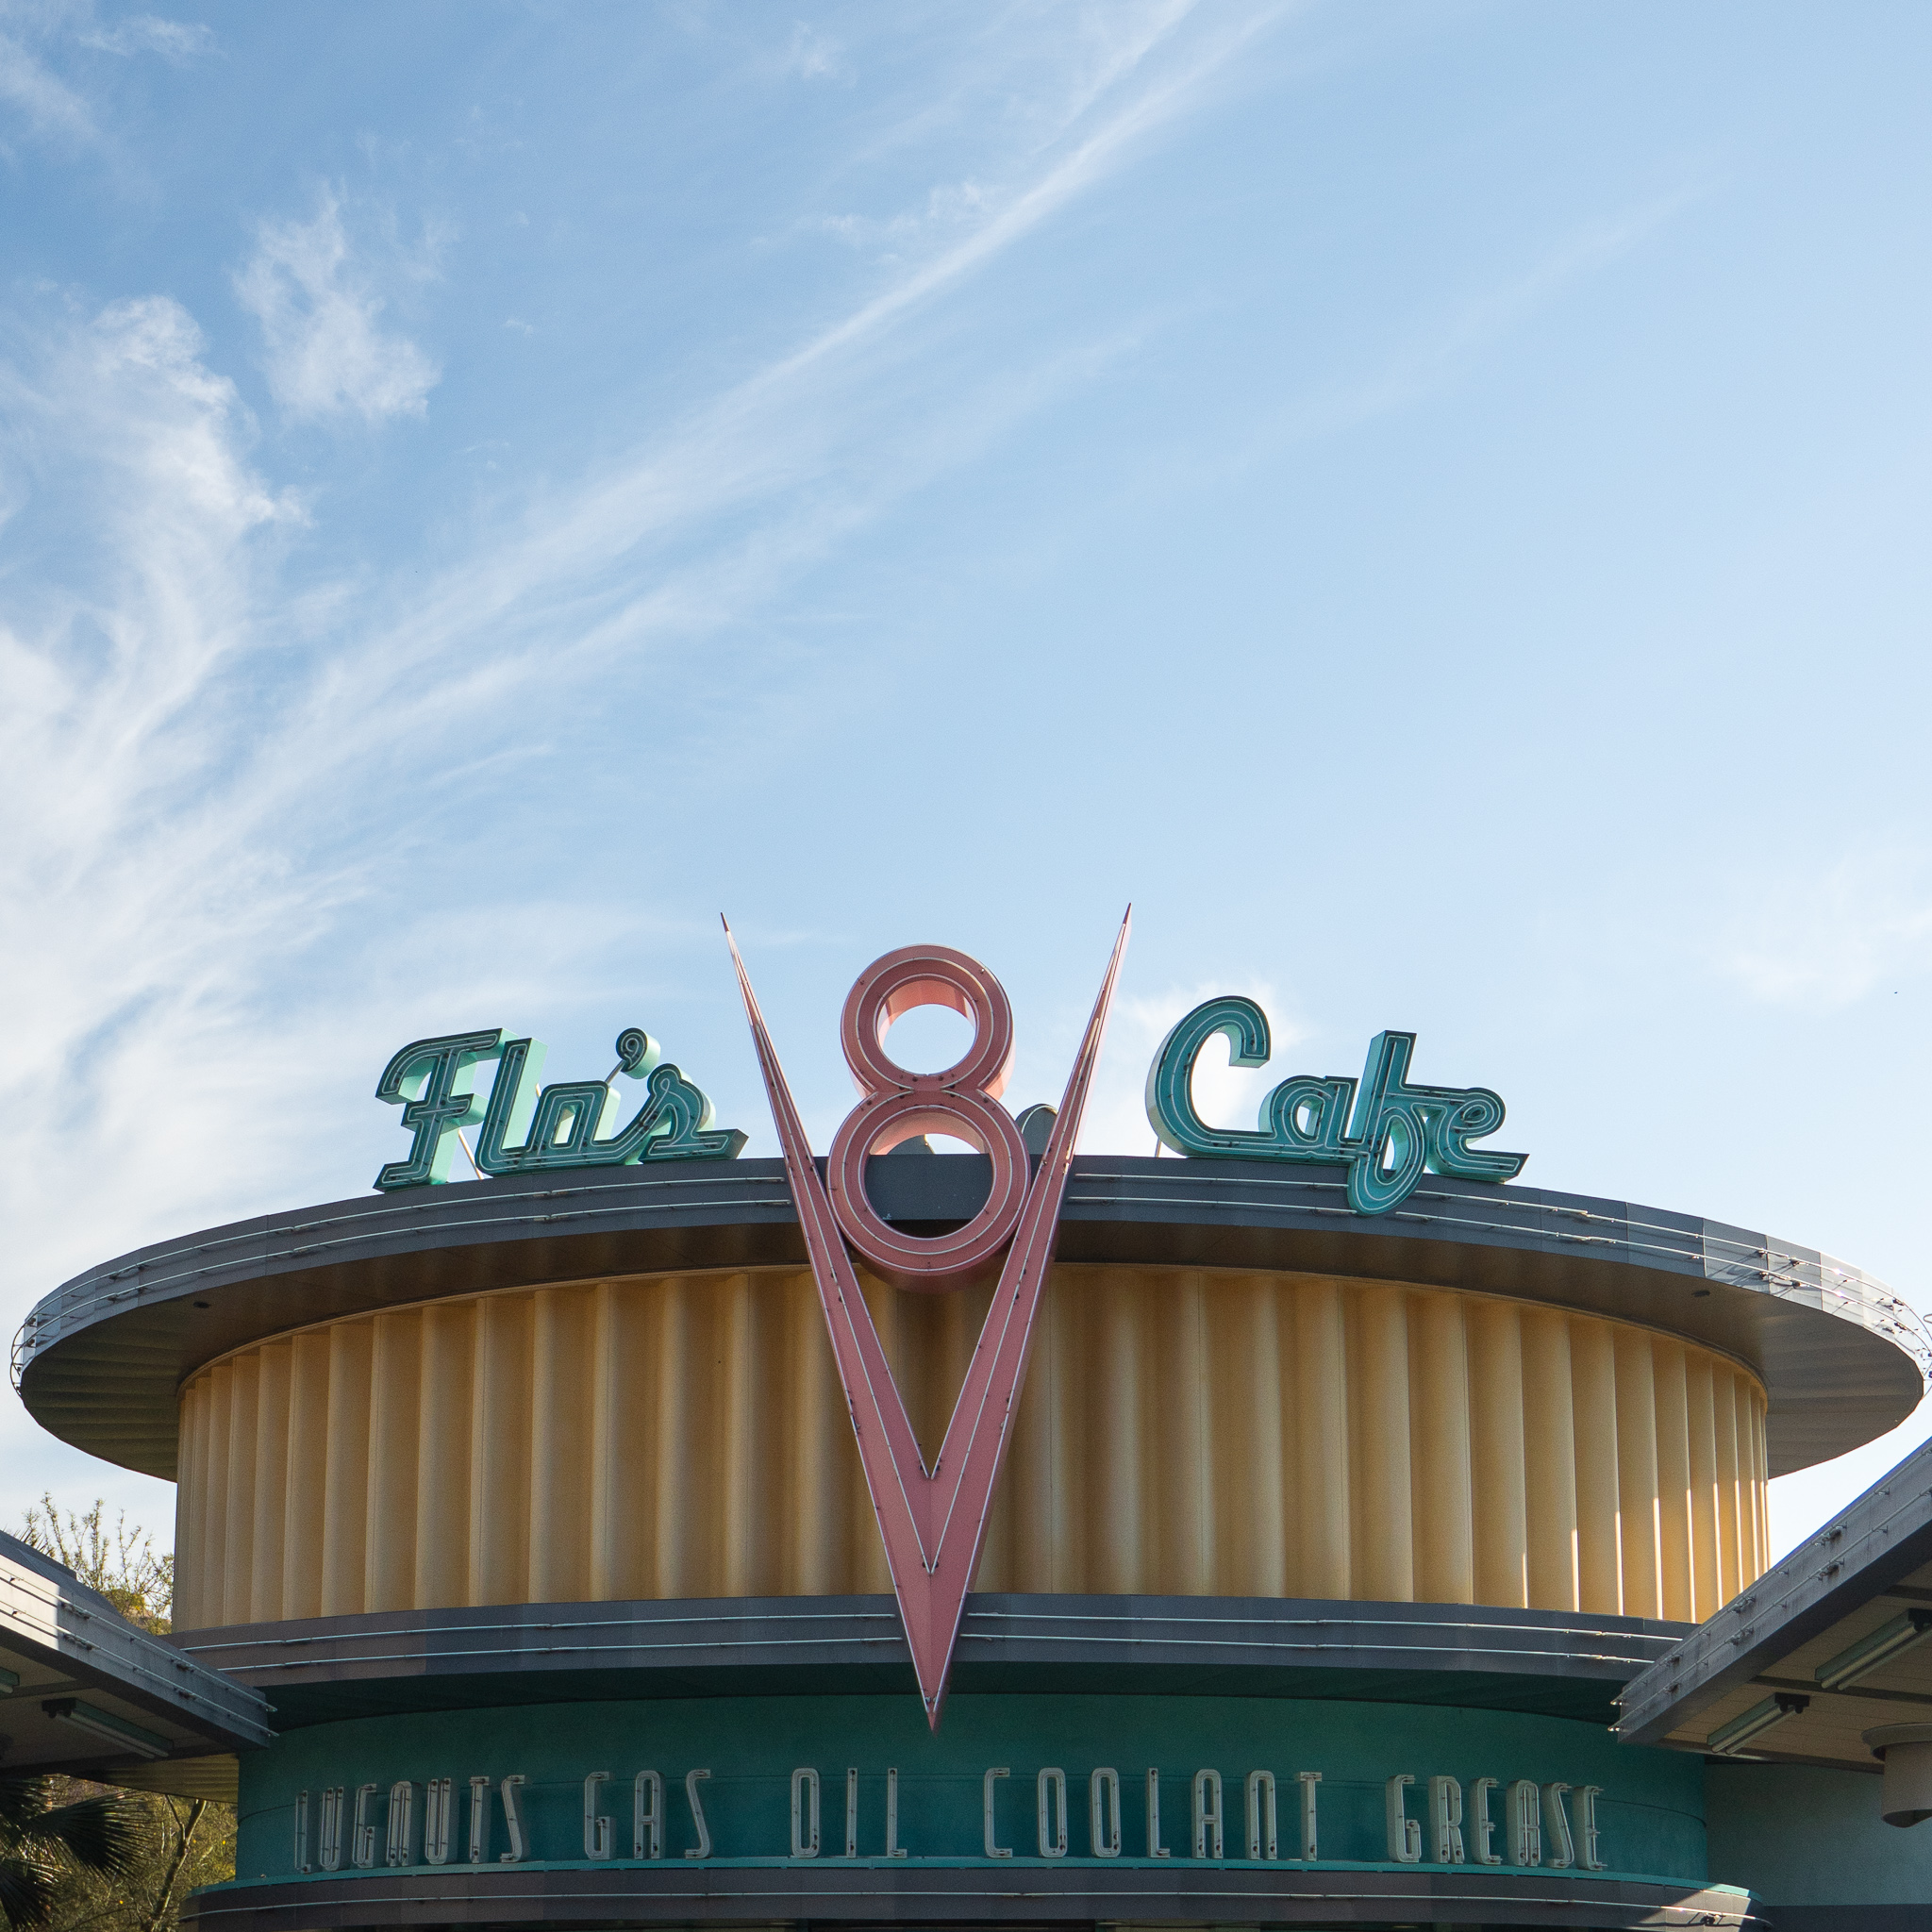 Flo's Cafe at Carsland in Disney California Adventure